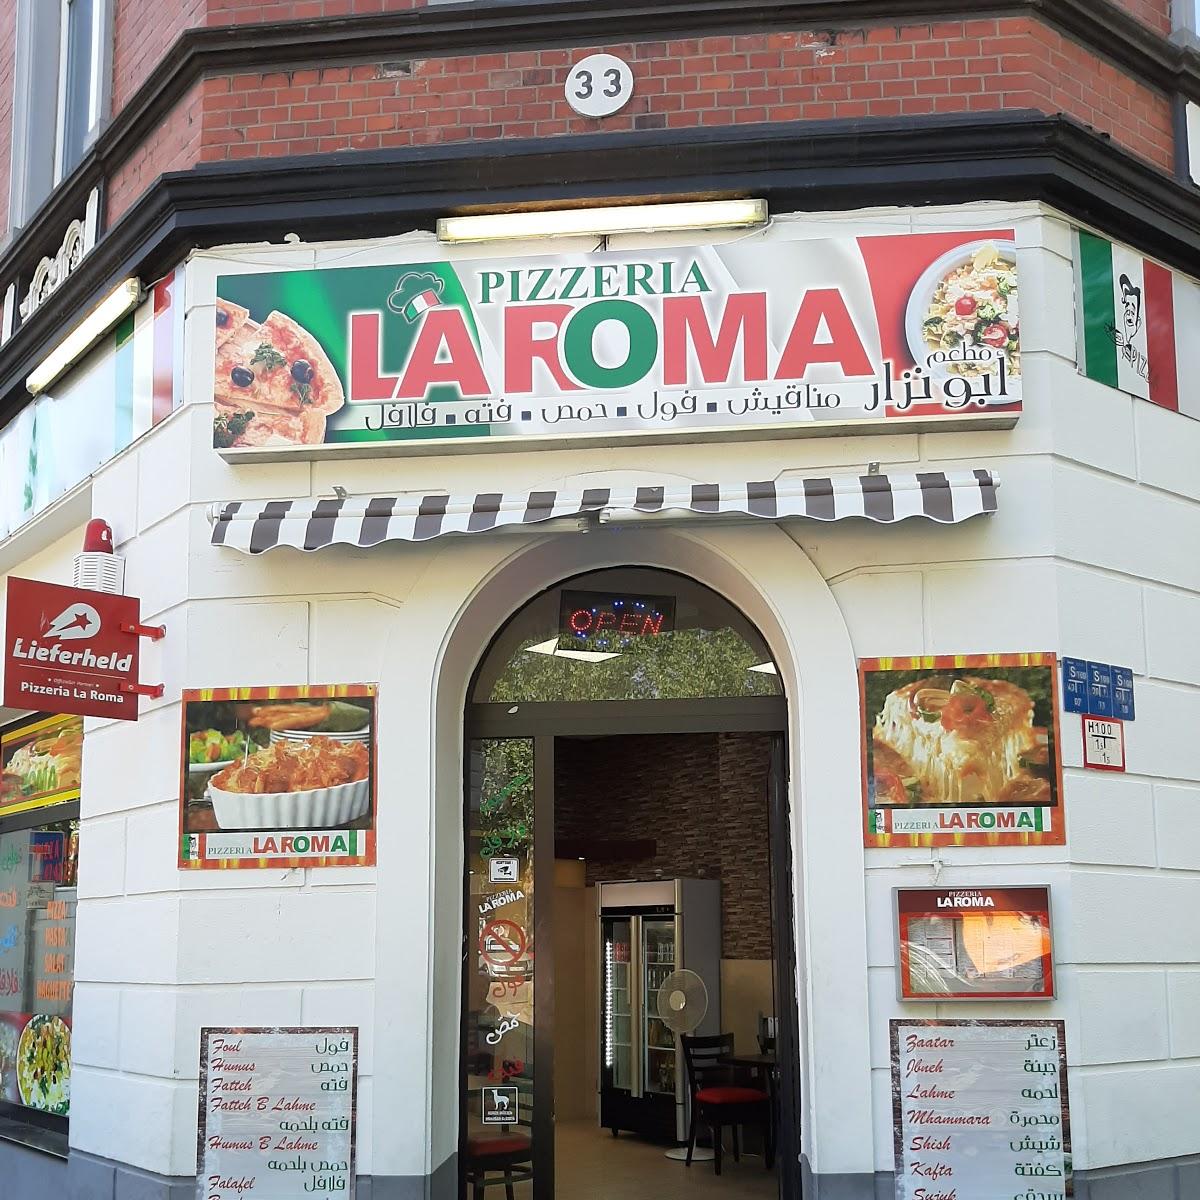 Restaurant "Pizzeria La Roma" in Dortmund